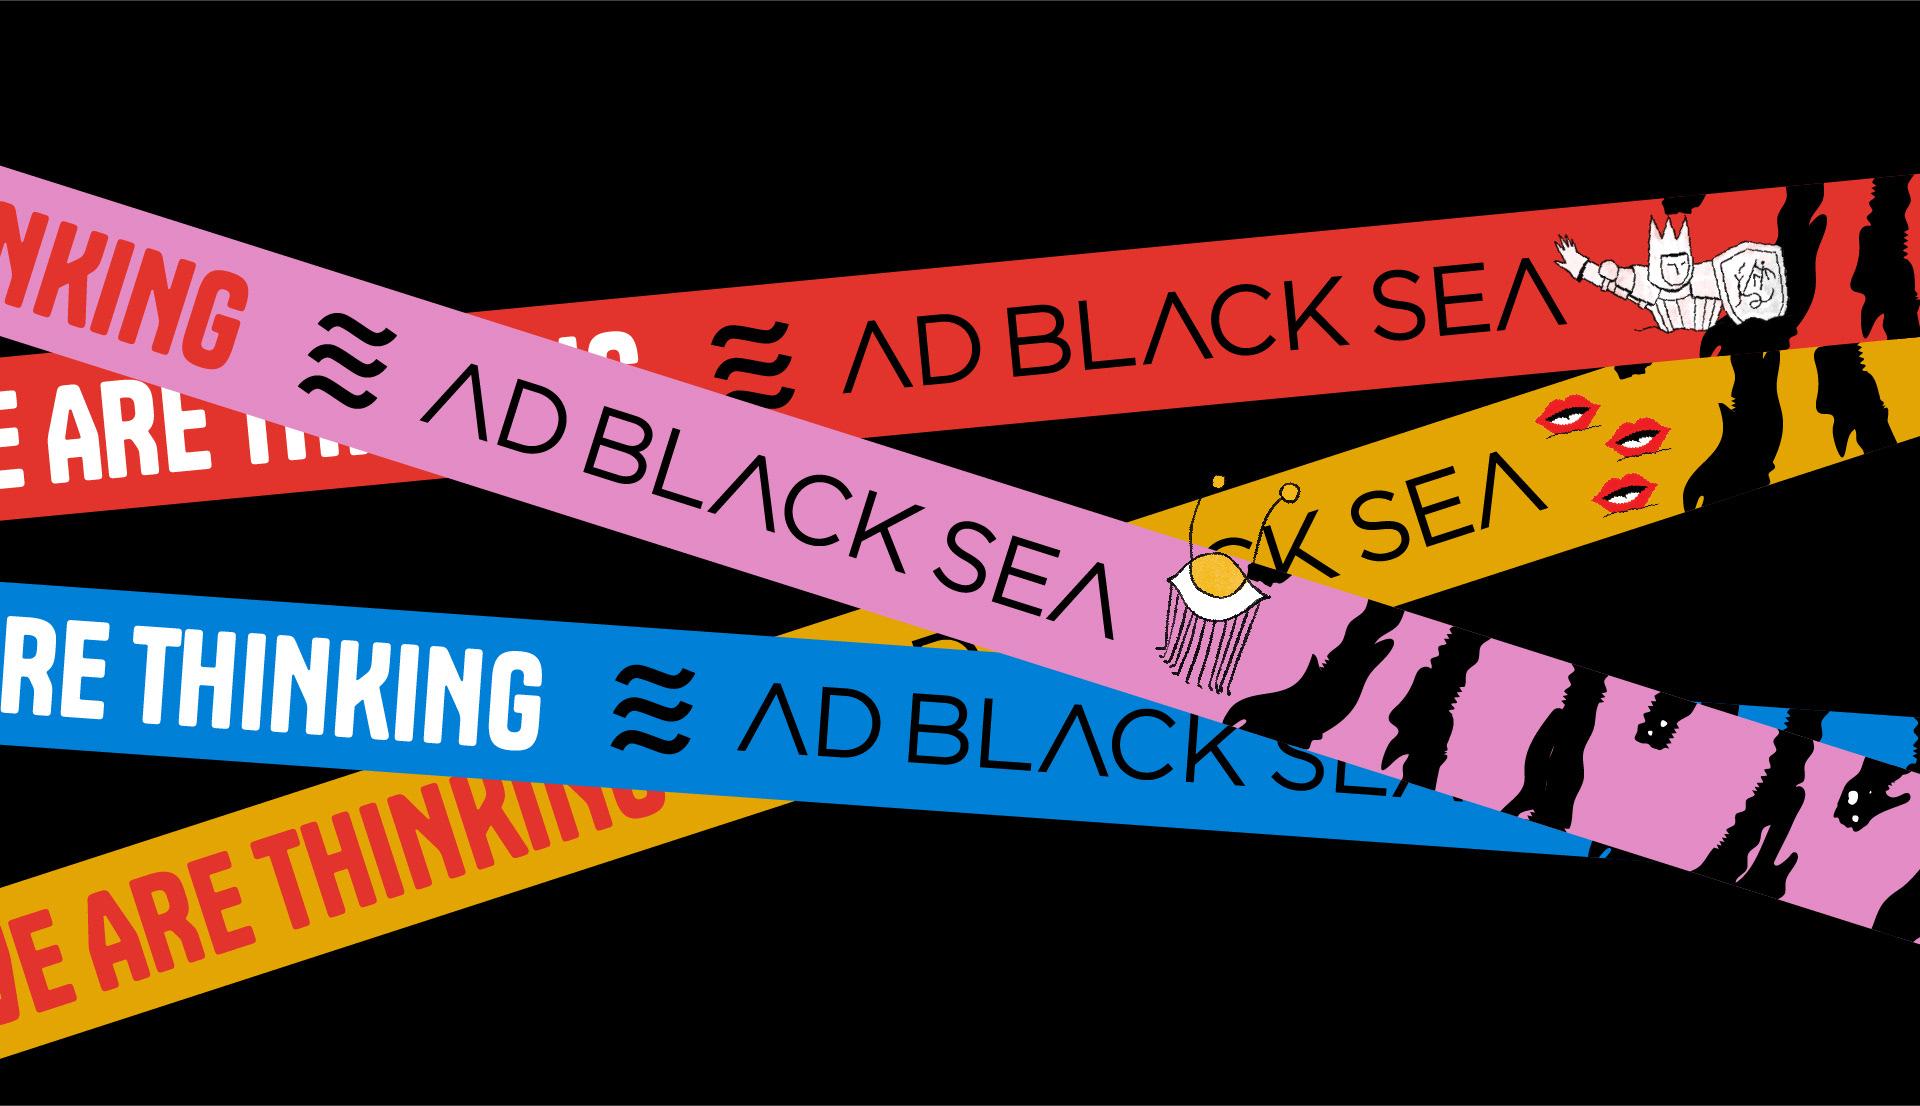 Ad Black Sea 2022 Branding image